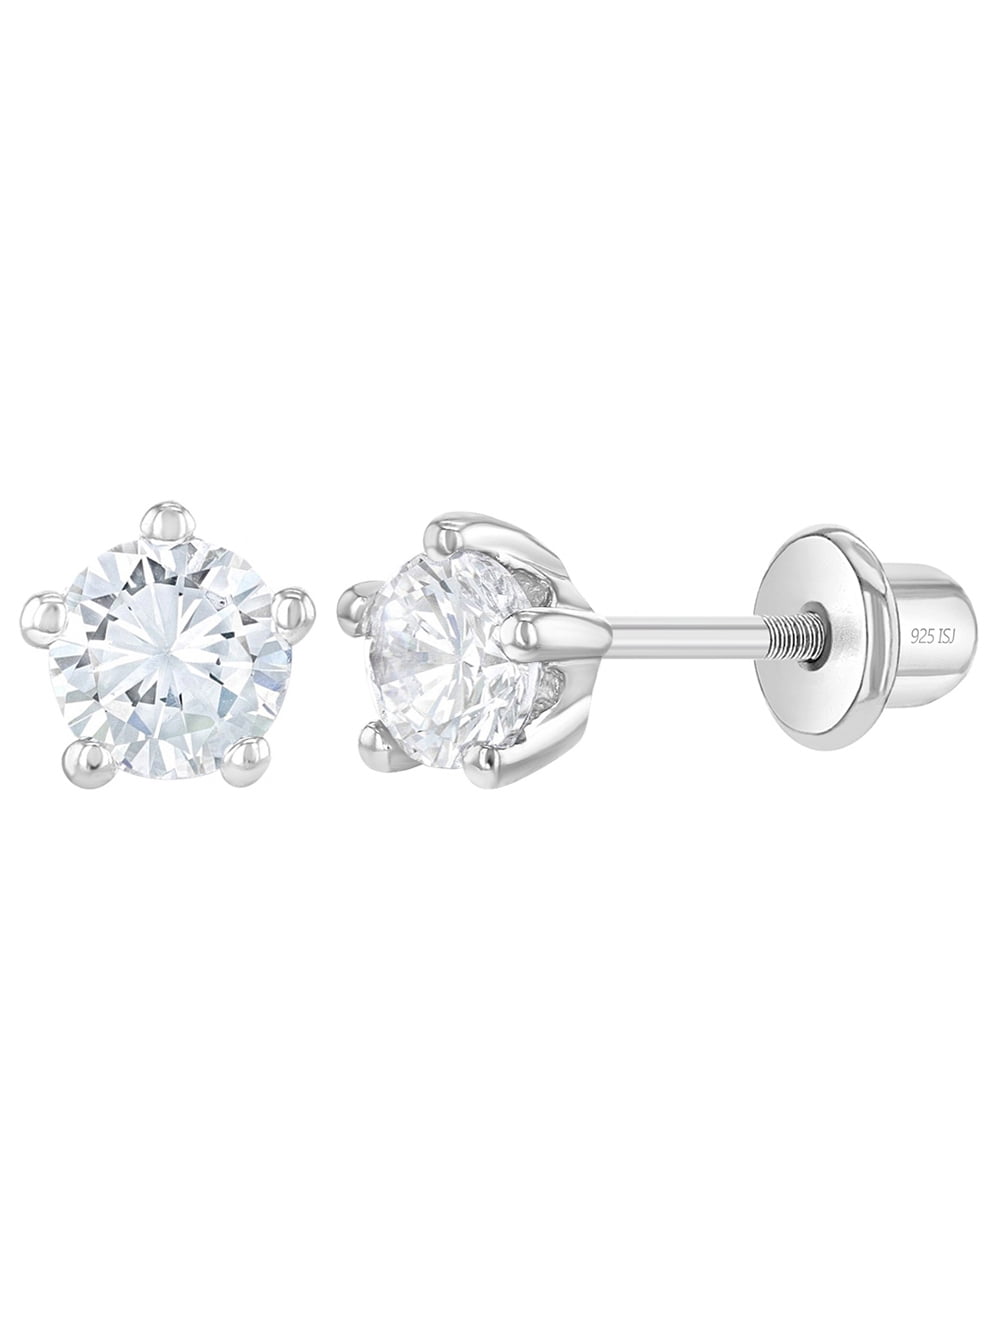 925 Sterling Silver Large Diamond Stud Earrings With Screw On Backs 